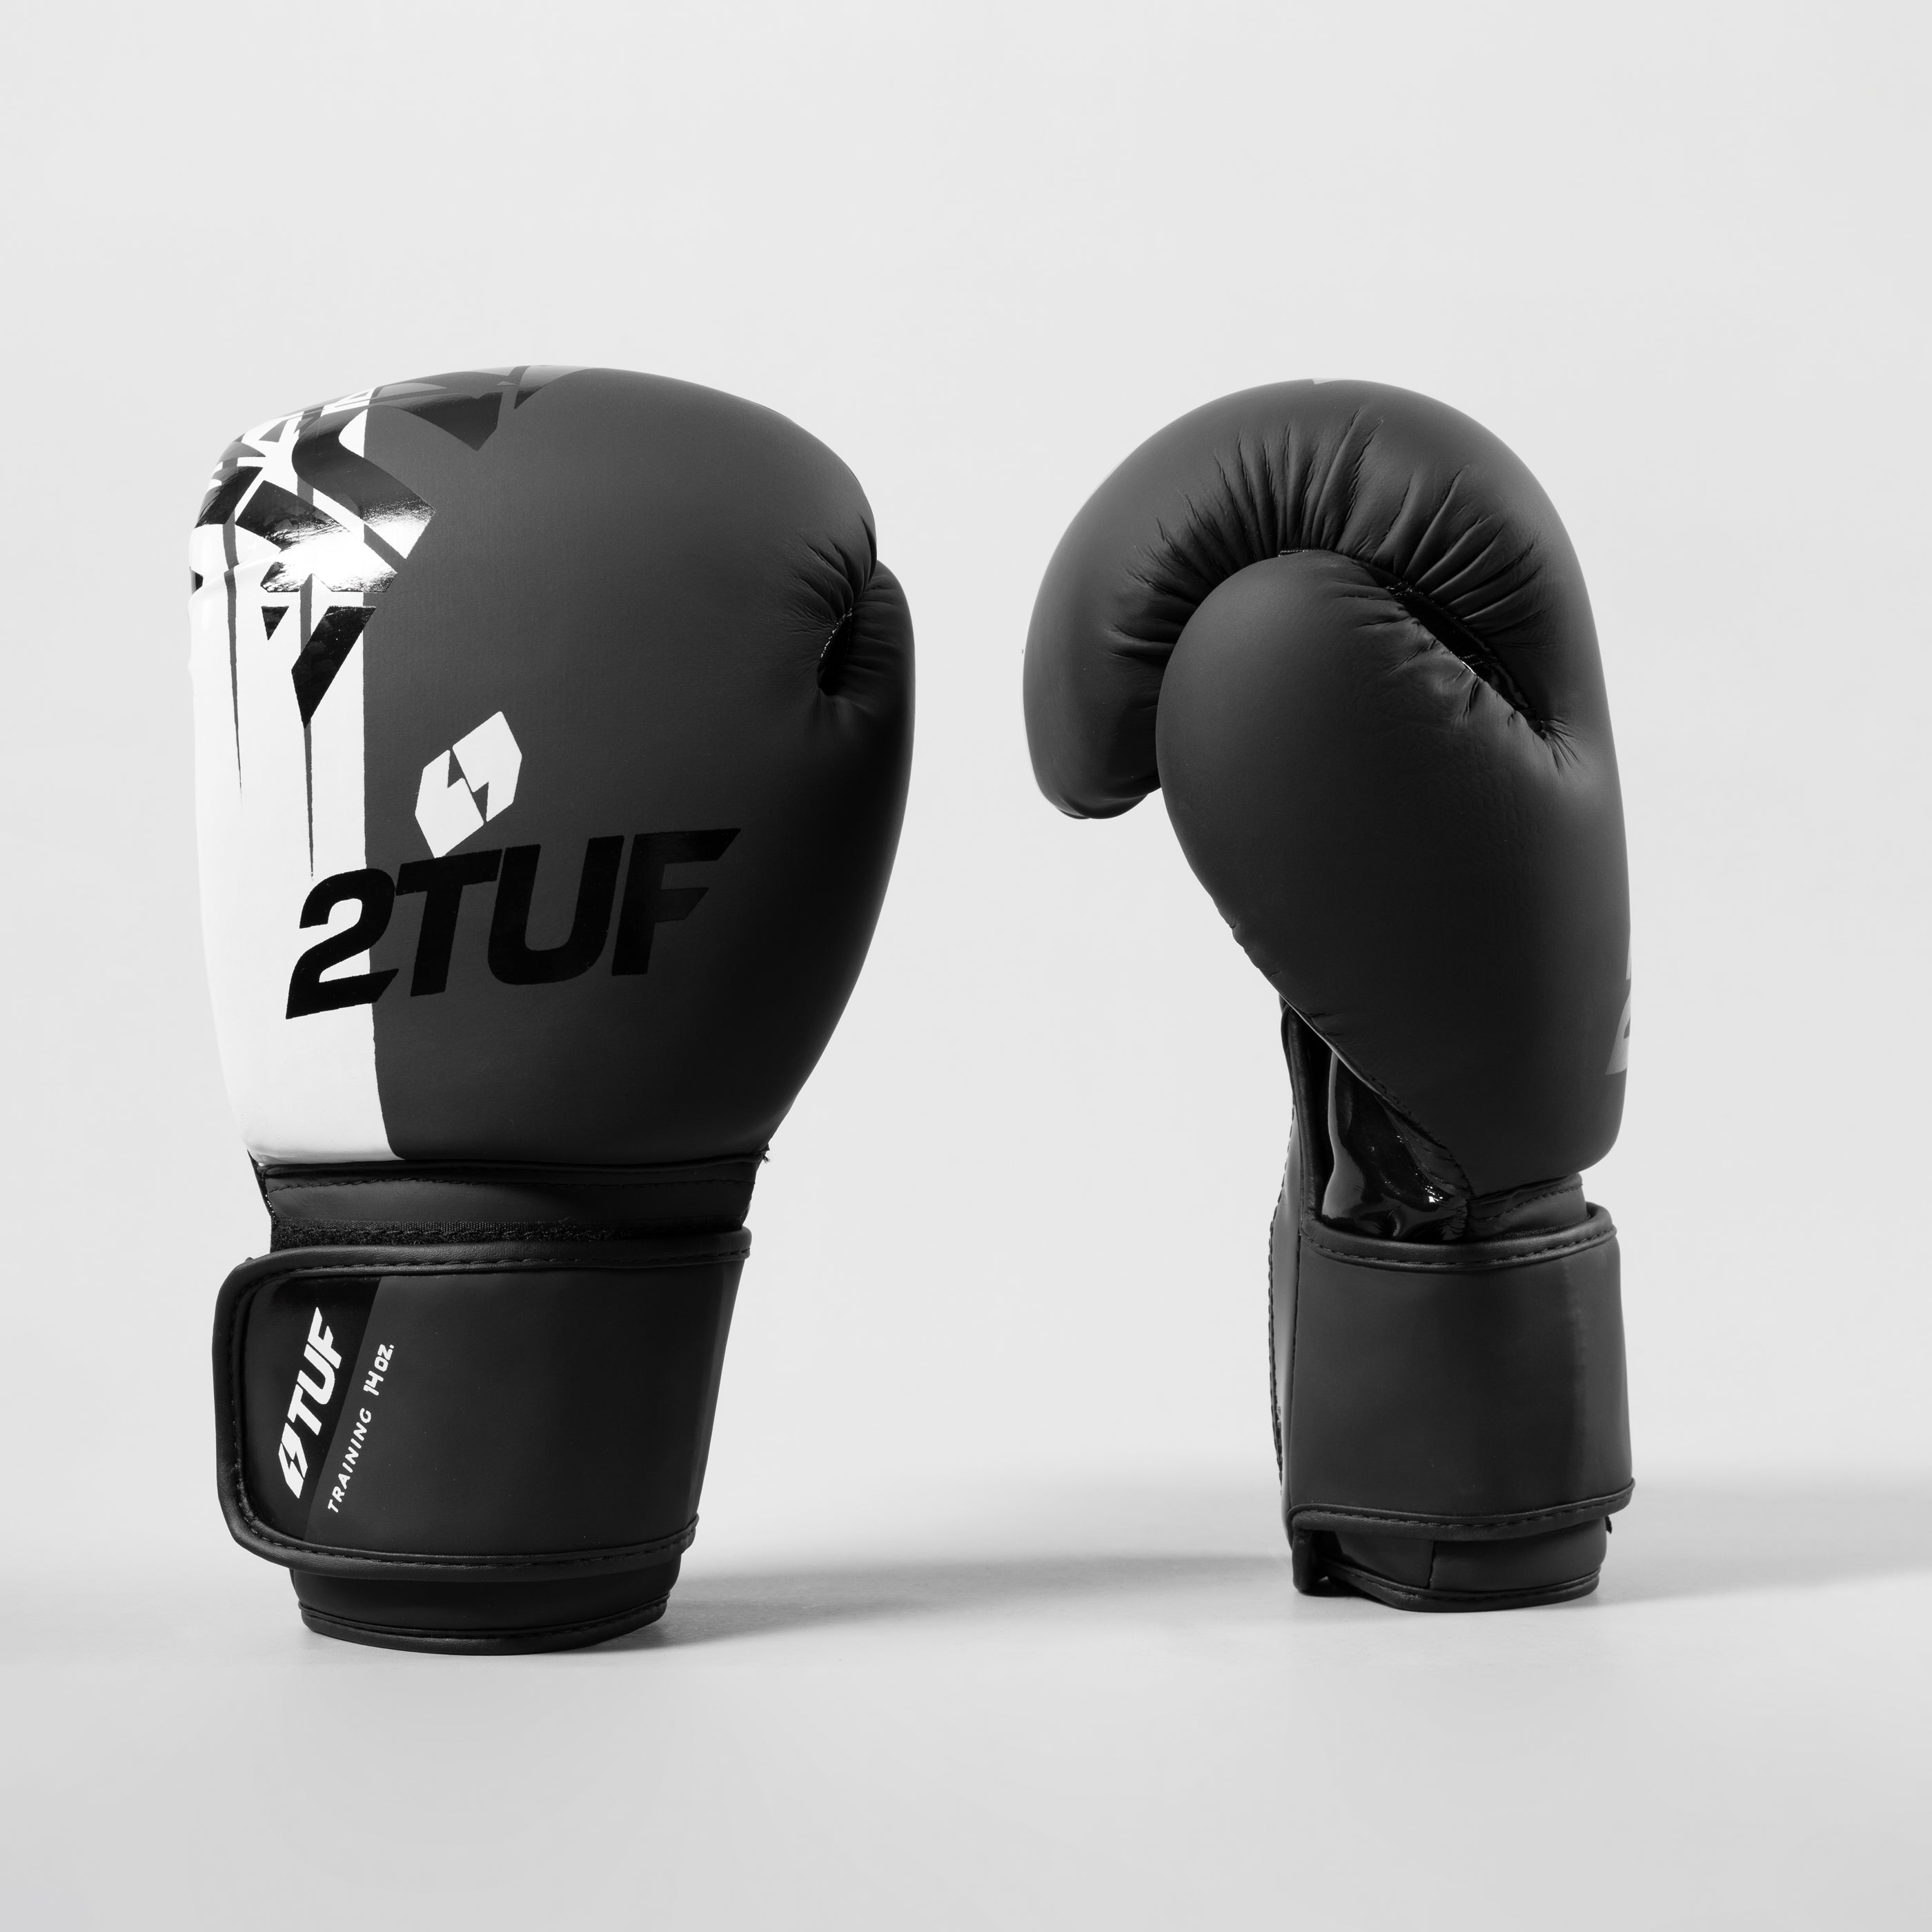 'Tuff' Boxing Gloves - Black/White 2TUF2TAP